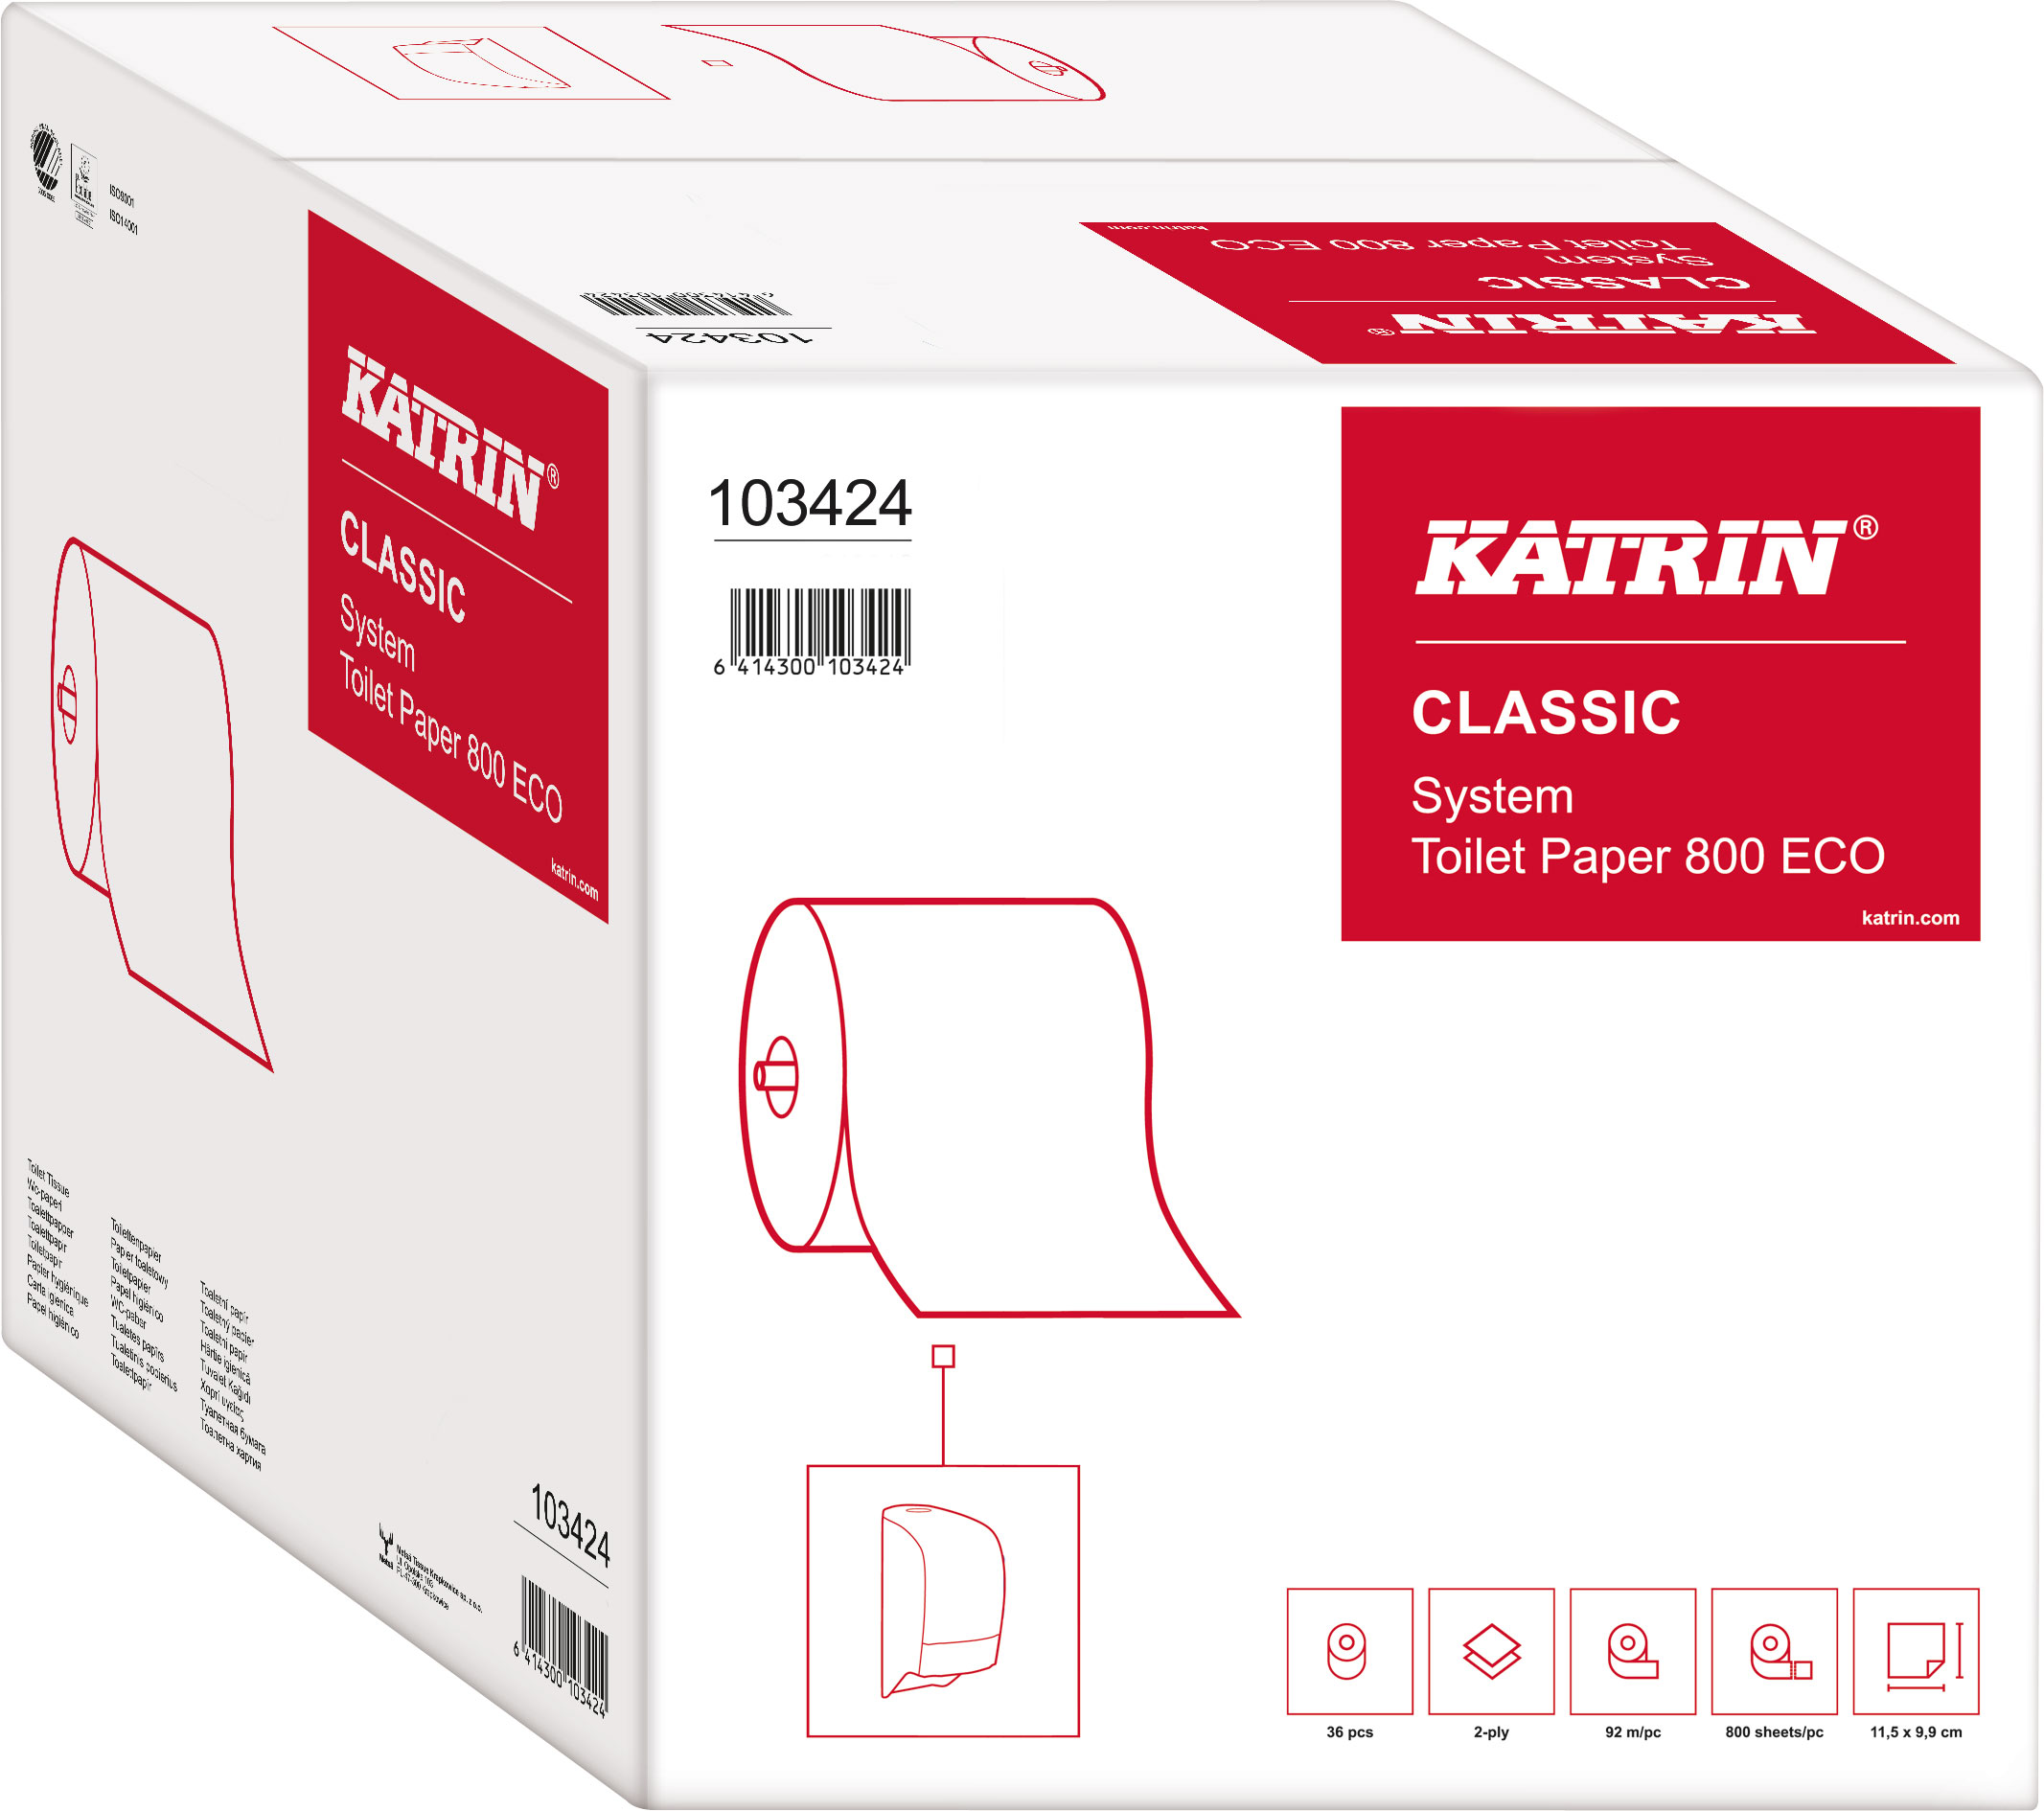 Katrin classic system toilet 800 eco